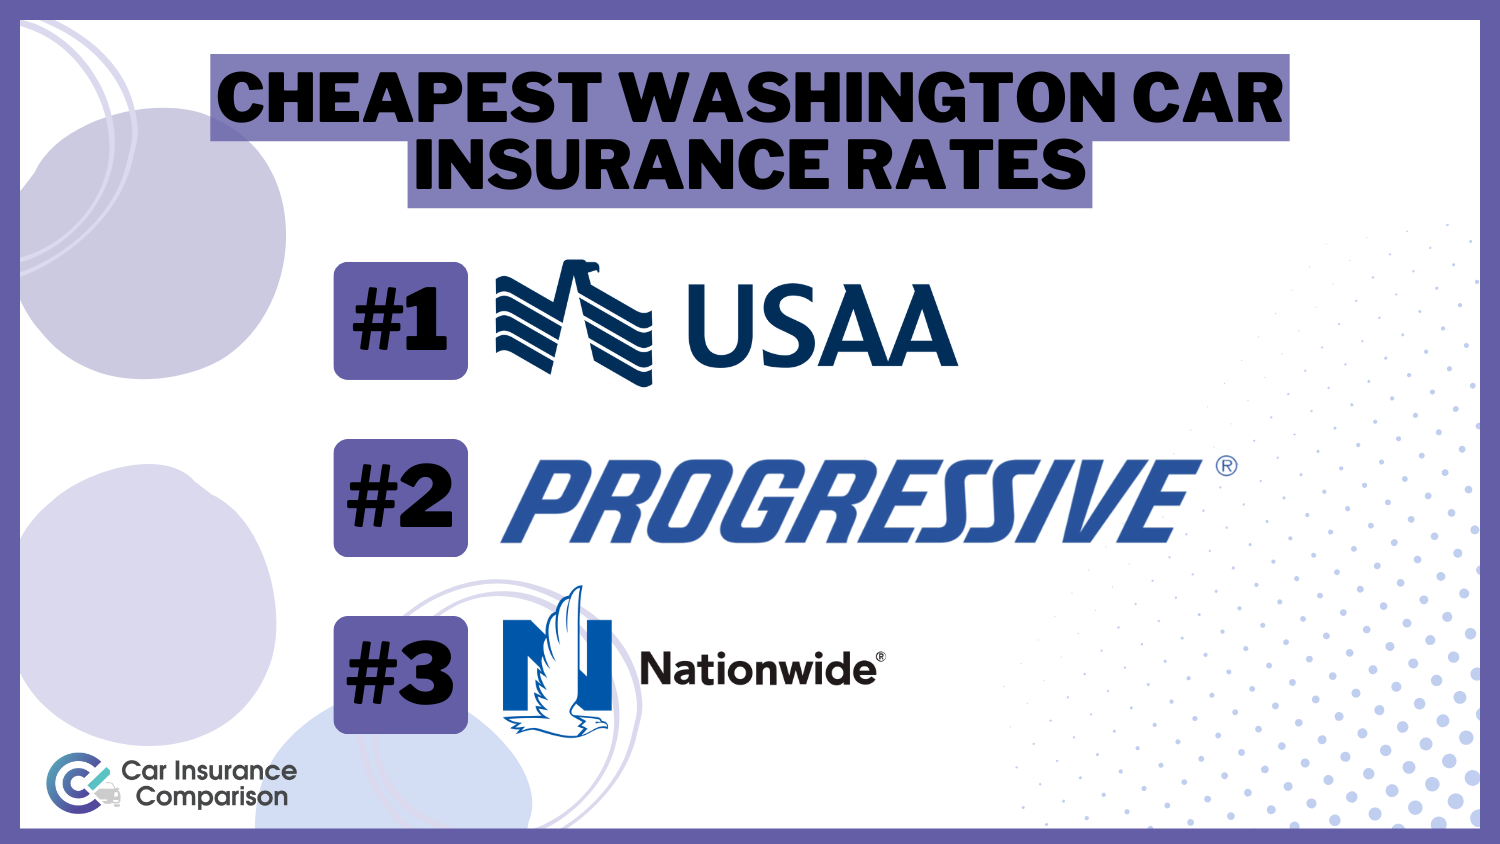 Cheapest Washington Car Insurance Rates: USAA, Progressive, Nationwide